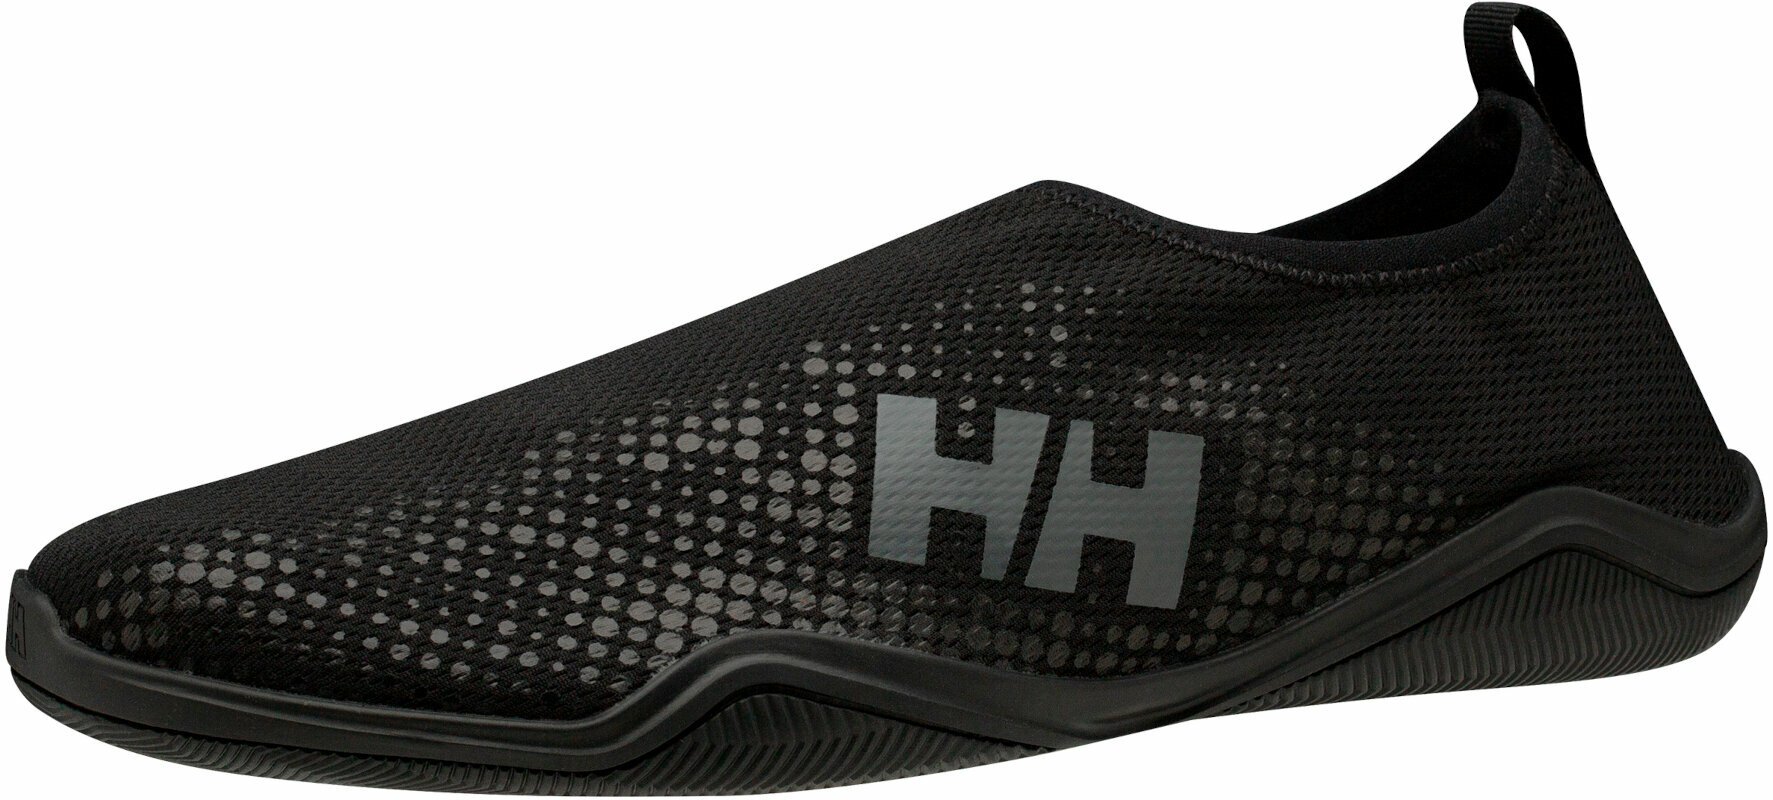 Herrenschuhe Helly Hansen Men's Crest Watermoc Black/Charcoal 44,5